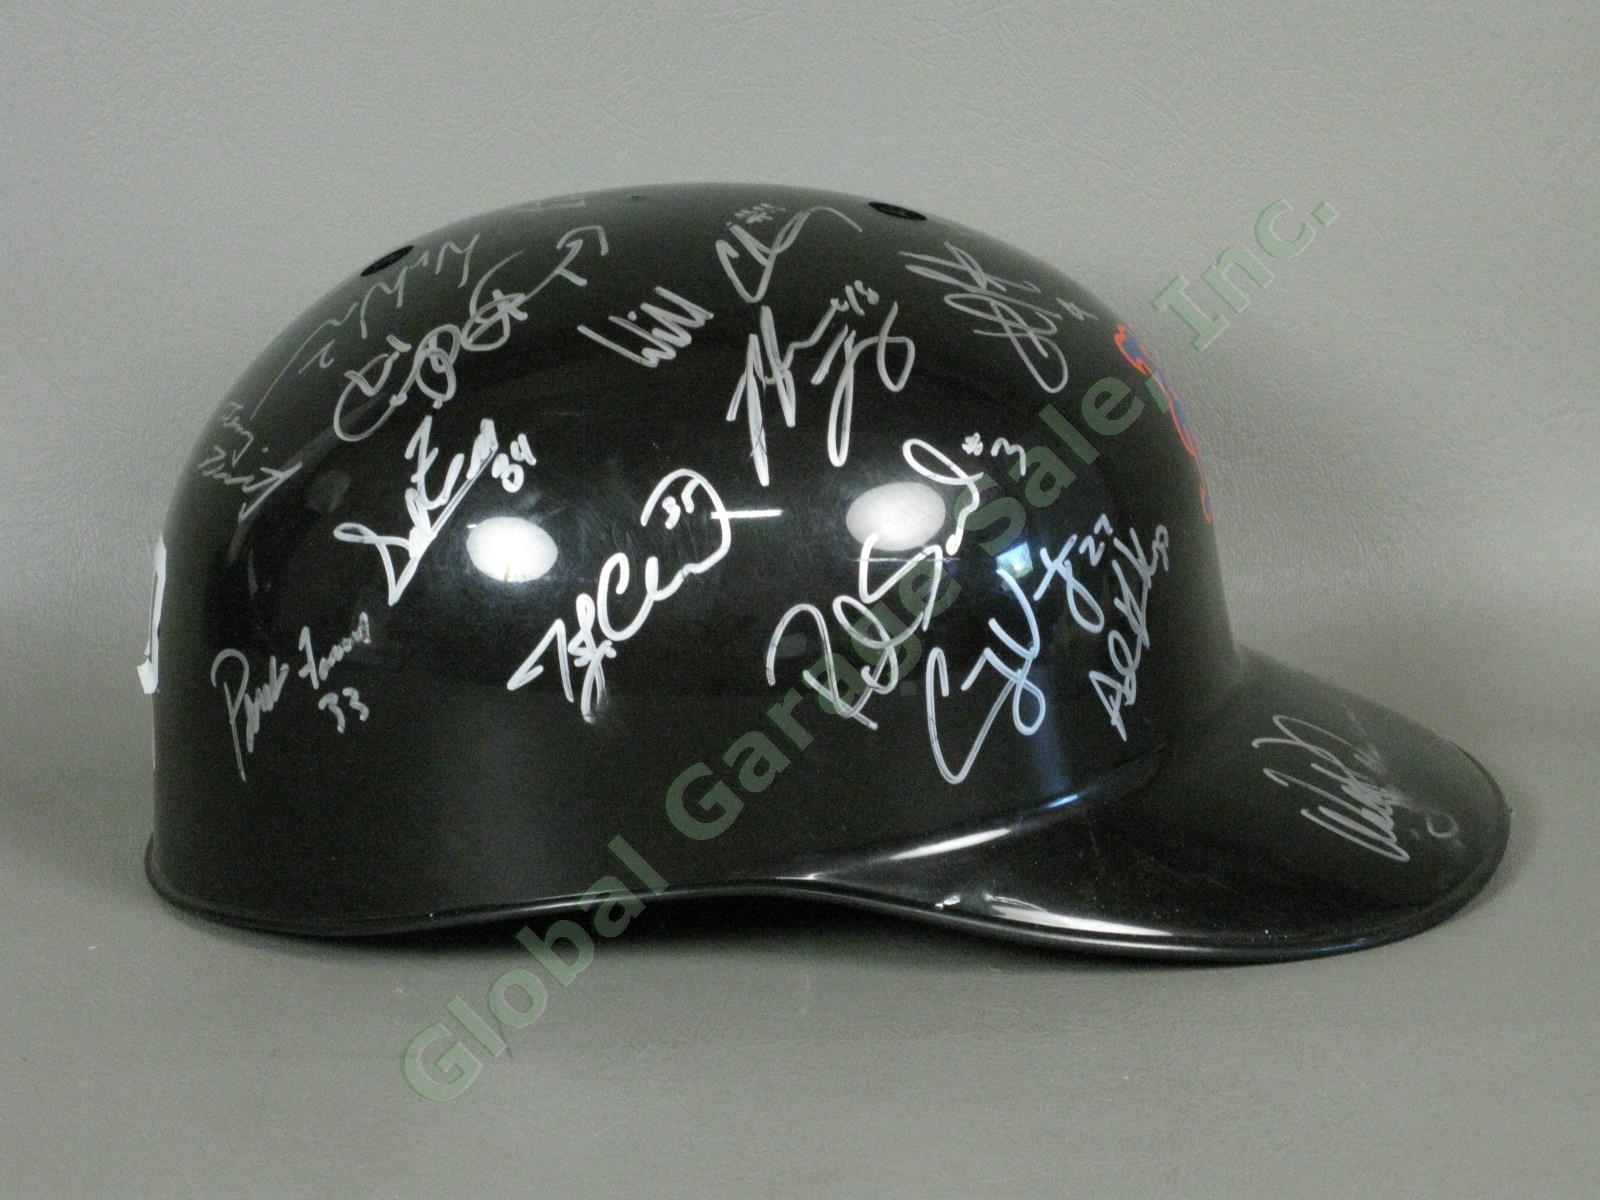 2010 Brooklyn Cyclones Team Signed Baseball Helmet MiLB MLB NYPL New York Mets 1